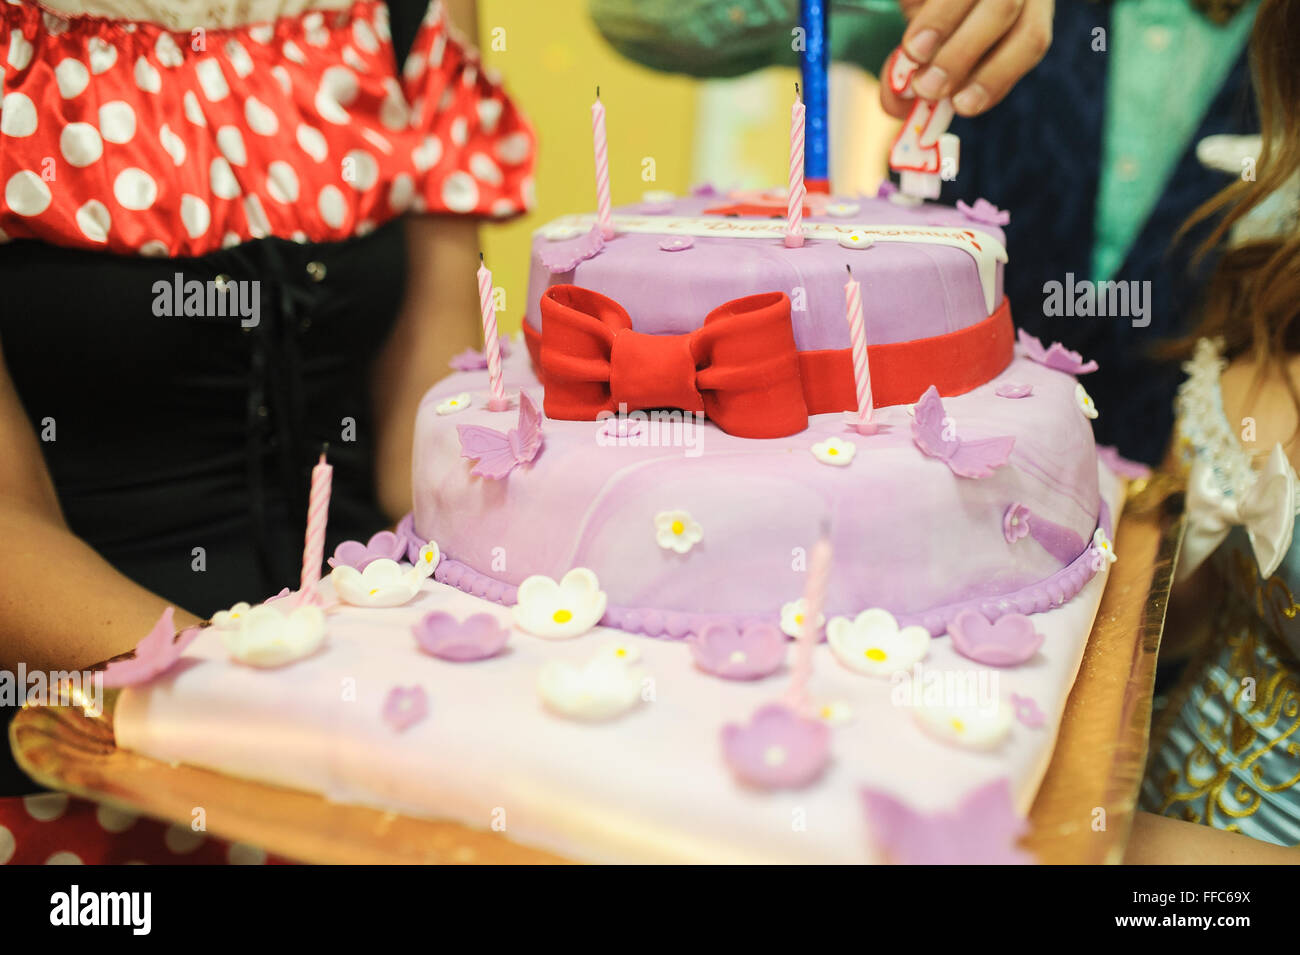 Baby birthday decor or baby shower sweet cake Stock Photo